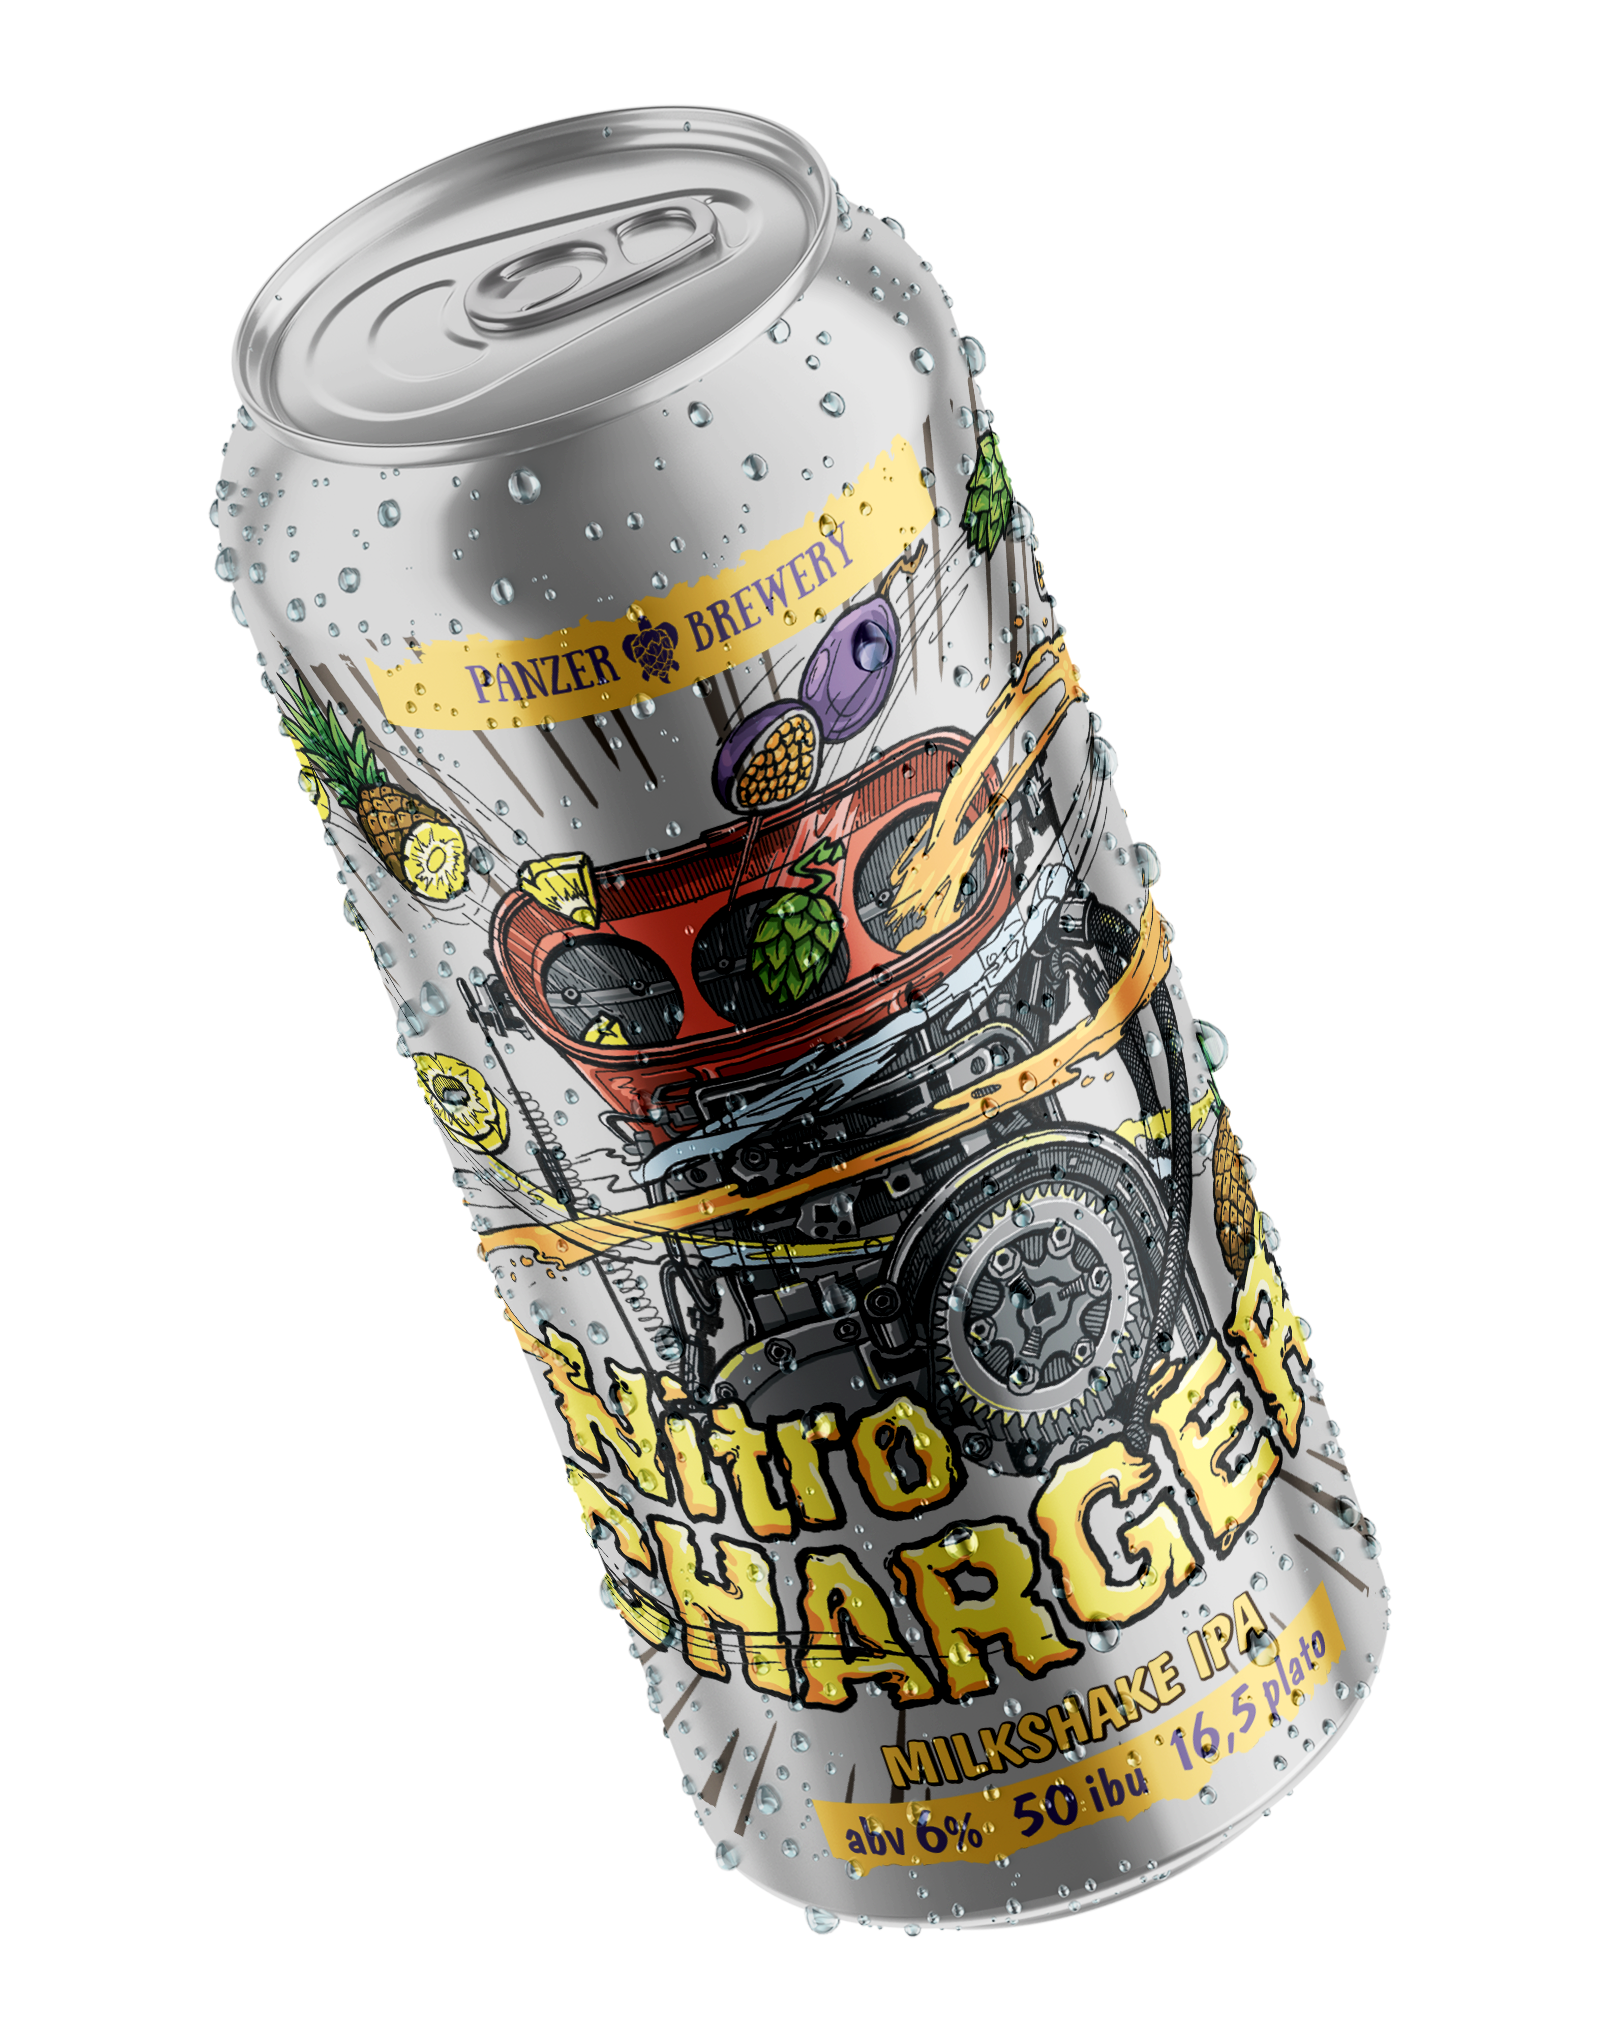 Банка пива Nitro Charger - Milkshake IPA от Panzer Brewery